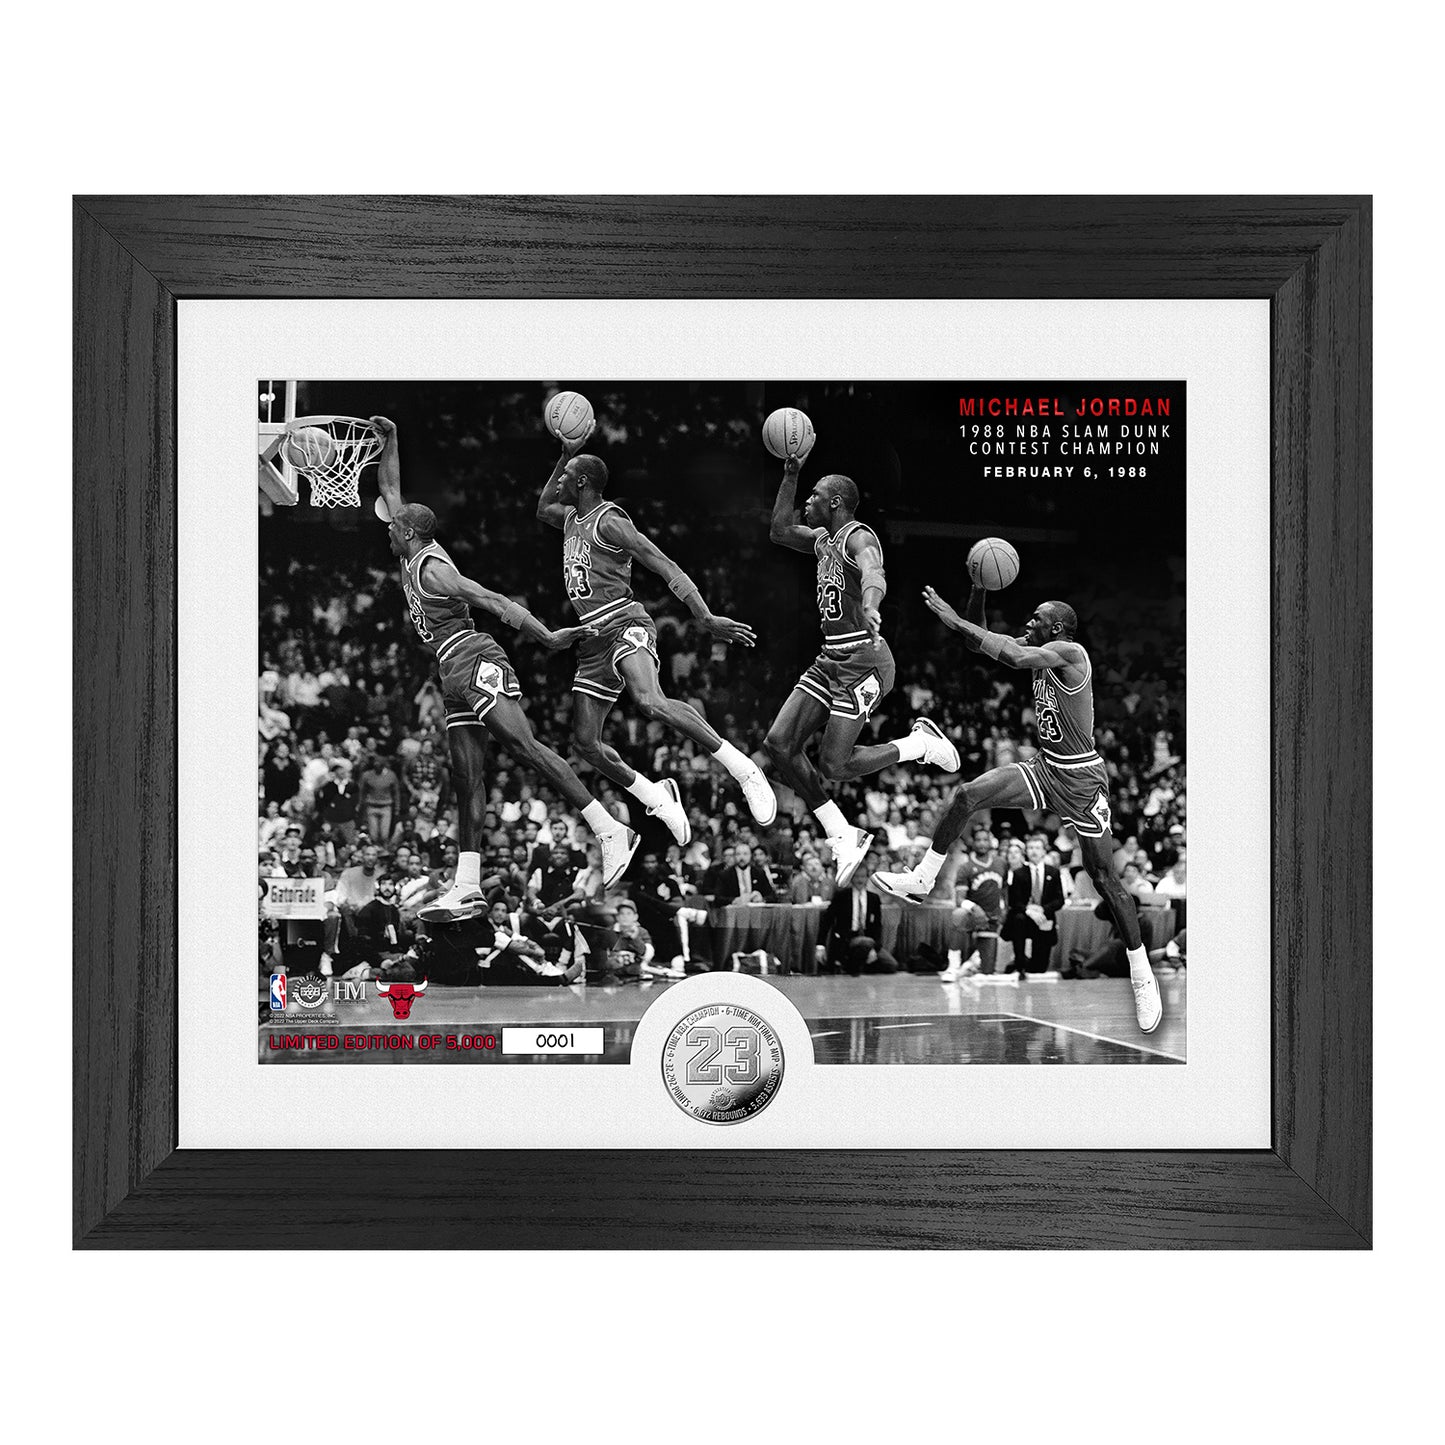 Chicago Bulls Michael Jordan 1988 NBA Slam Dunk Champion Silver Coin Photo Mint - Front View